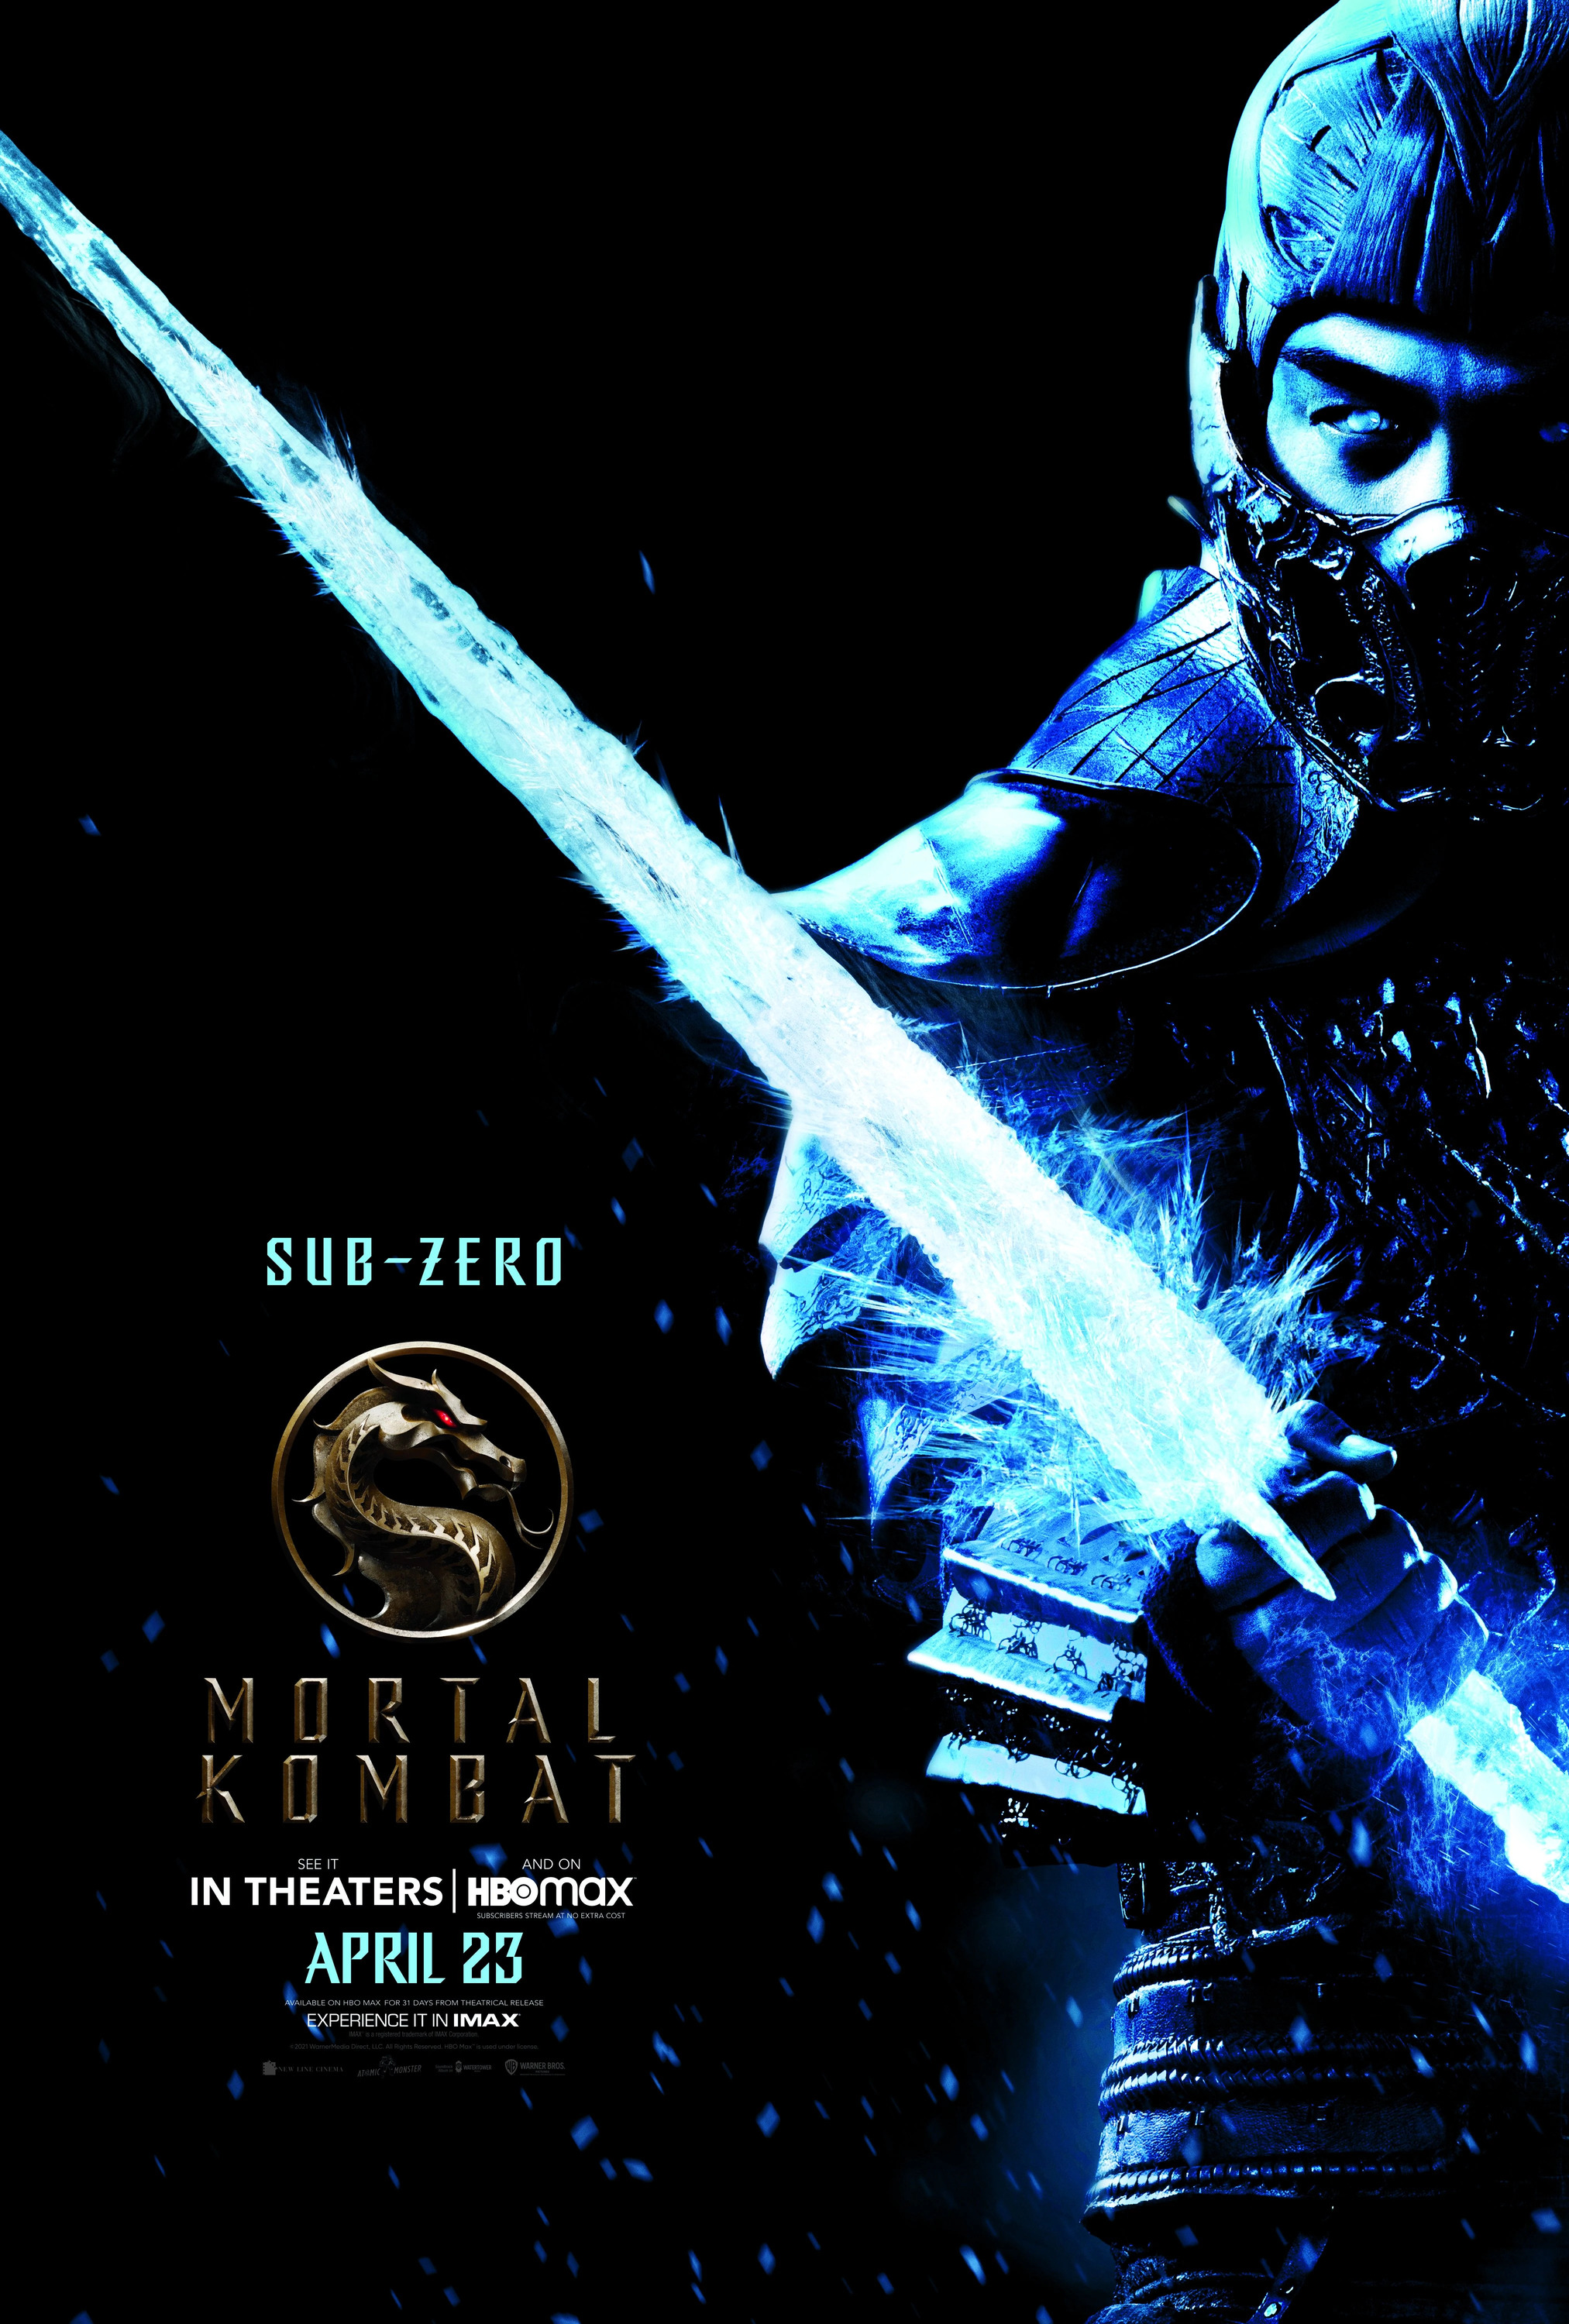 Mega Sized Movie Poster Image for Mortal Kombat (#16 of 16)